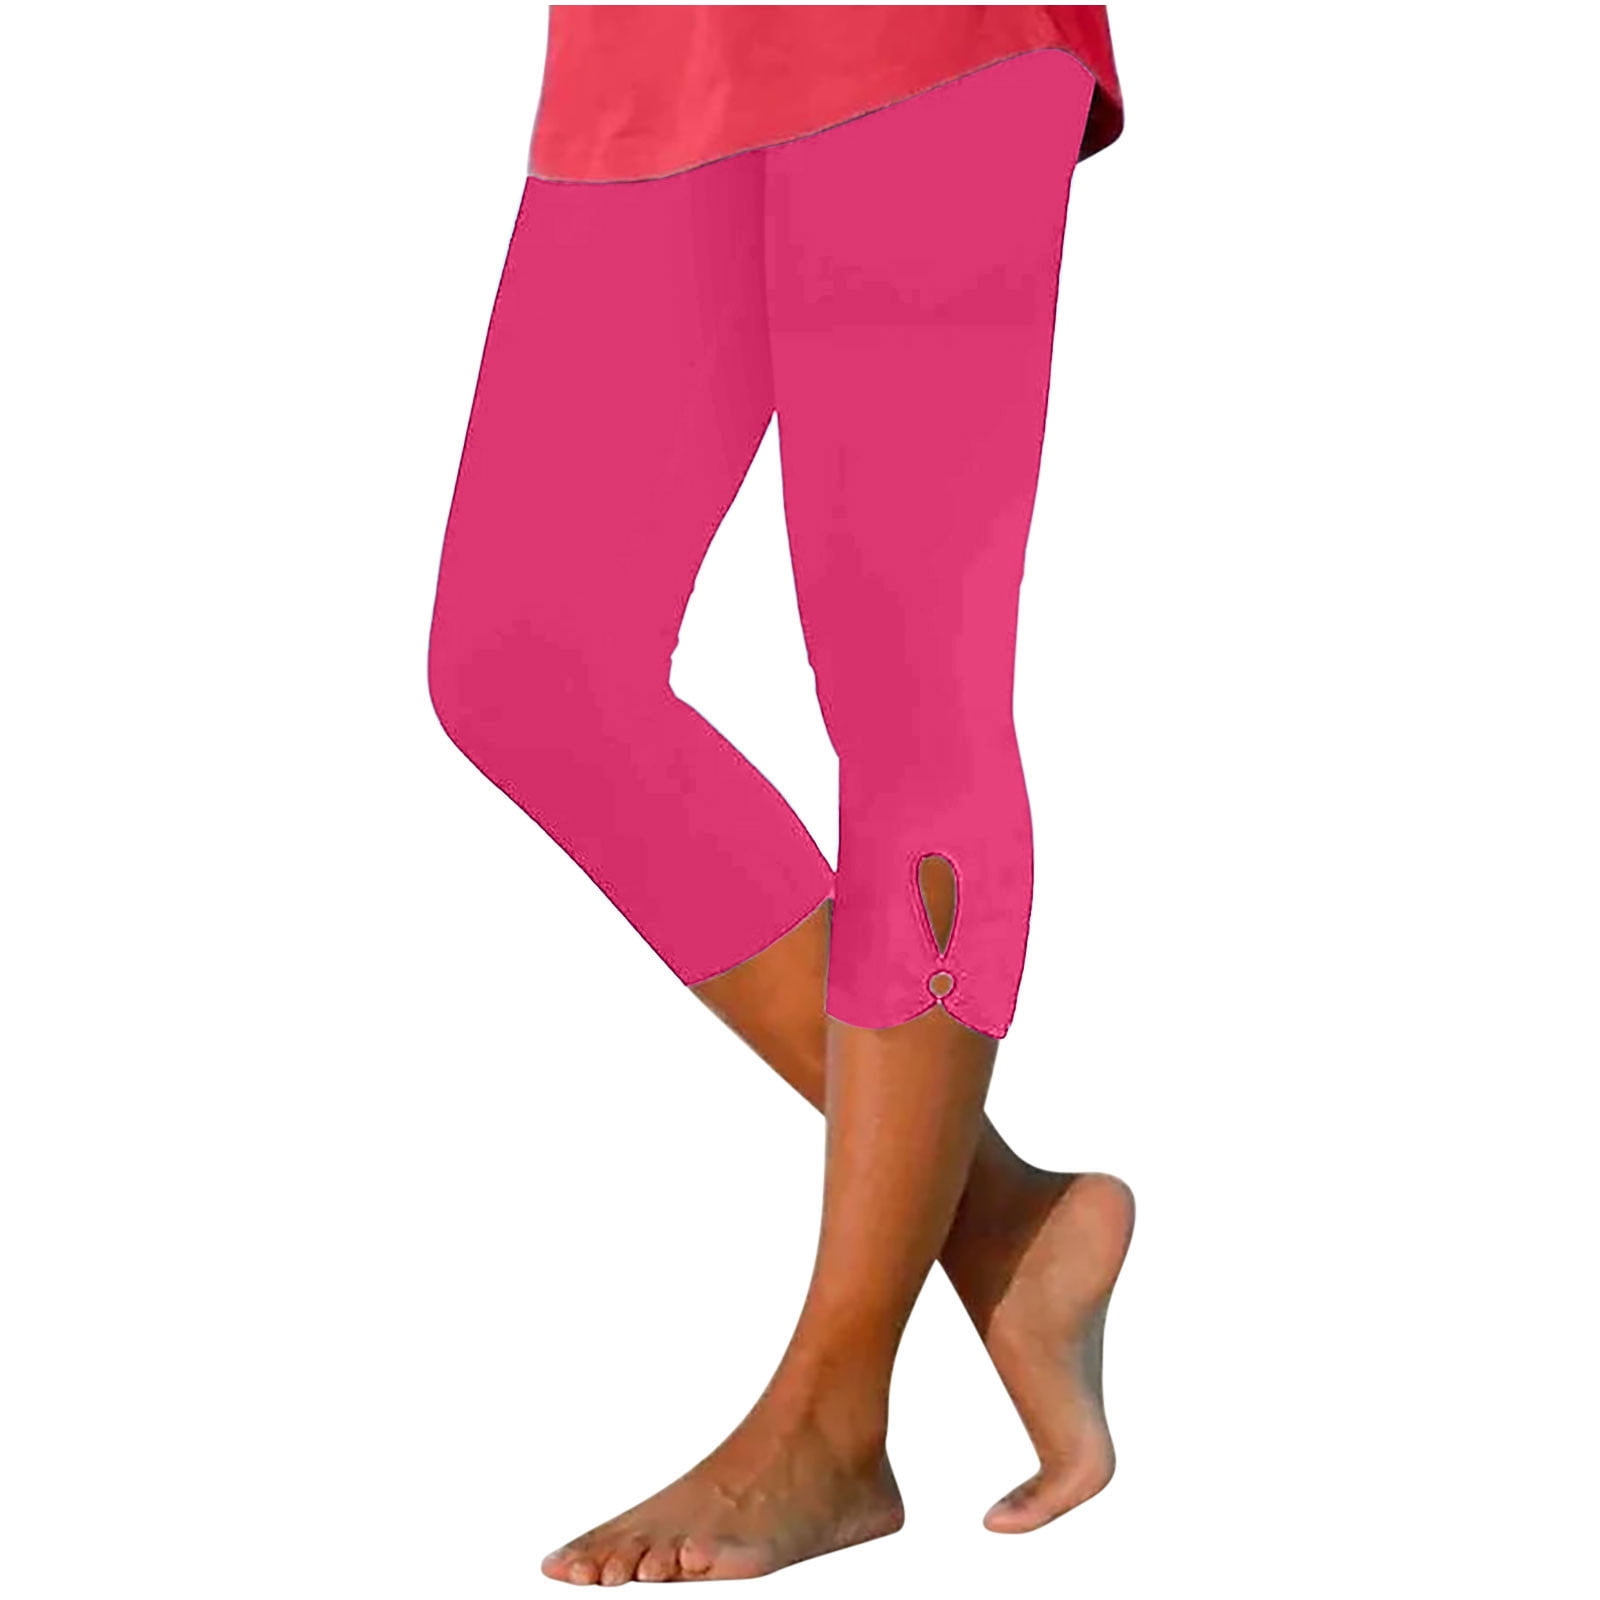 PMUYBHF Yoga Pants with Pockets Tall Women 34-36 Inseam Christmas